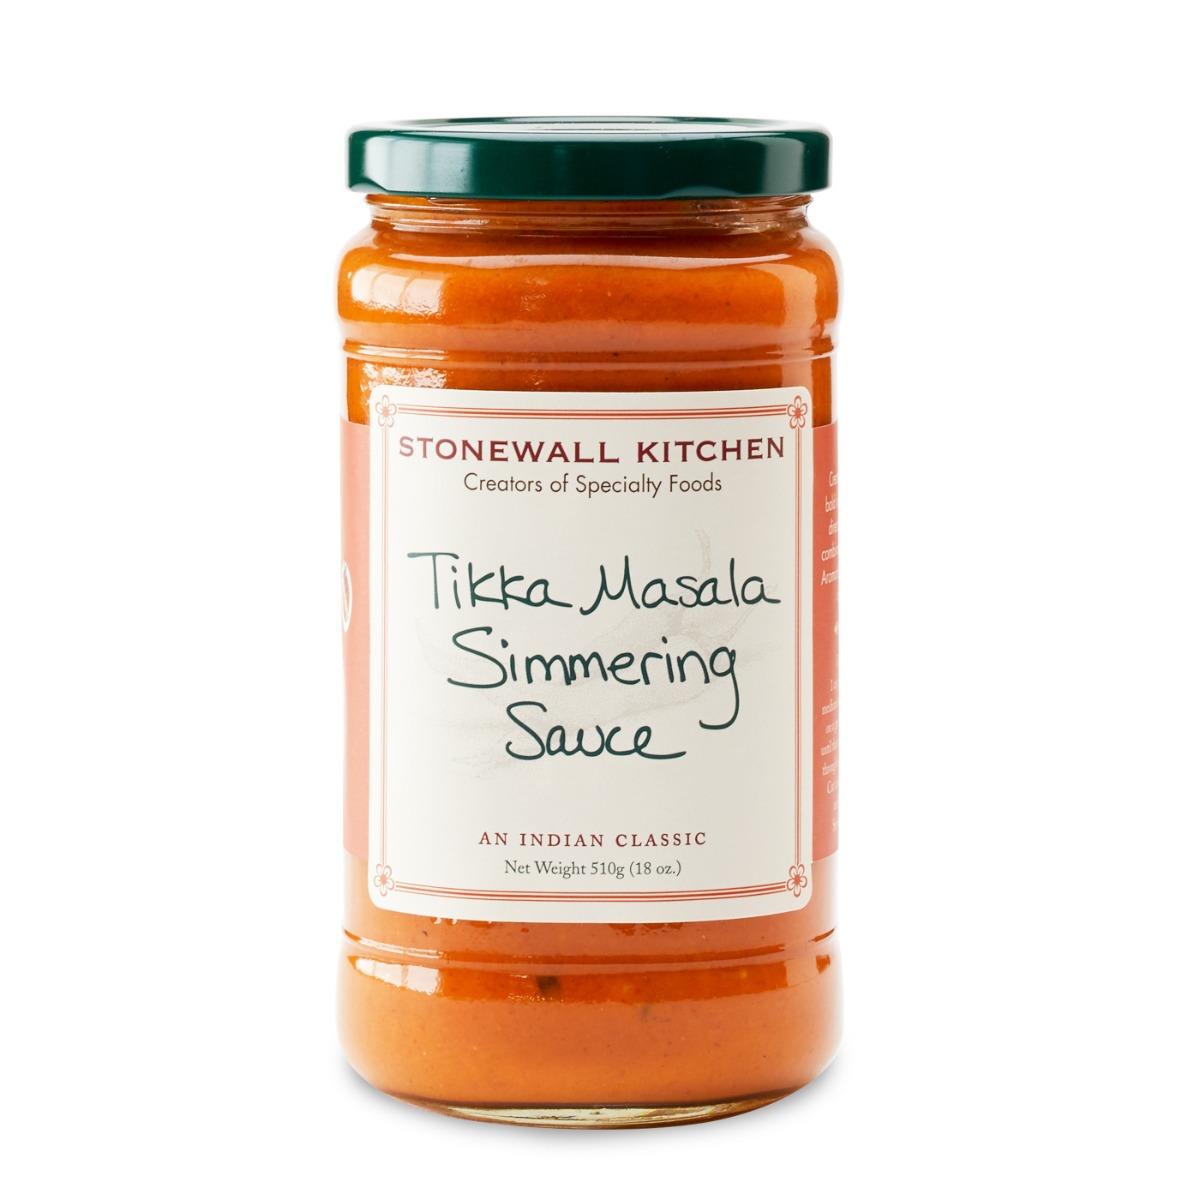 STONEWALL KITCHEN: Tikka Masala Simmering Sauce, 18 oz - 0711381321003